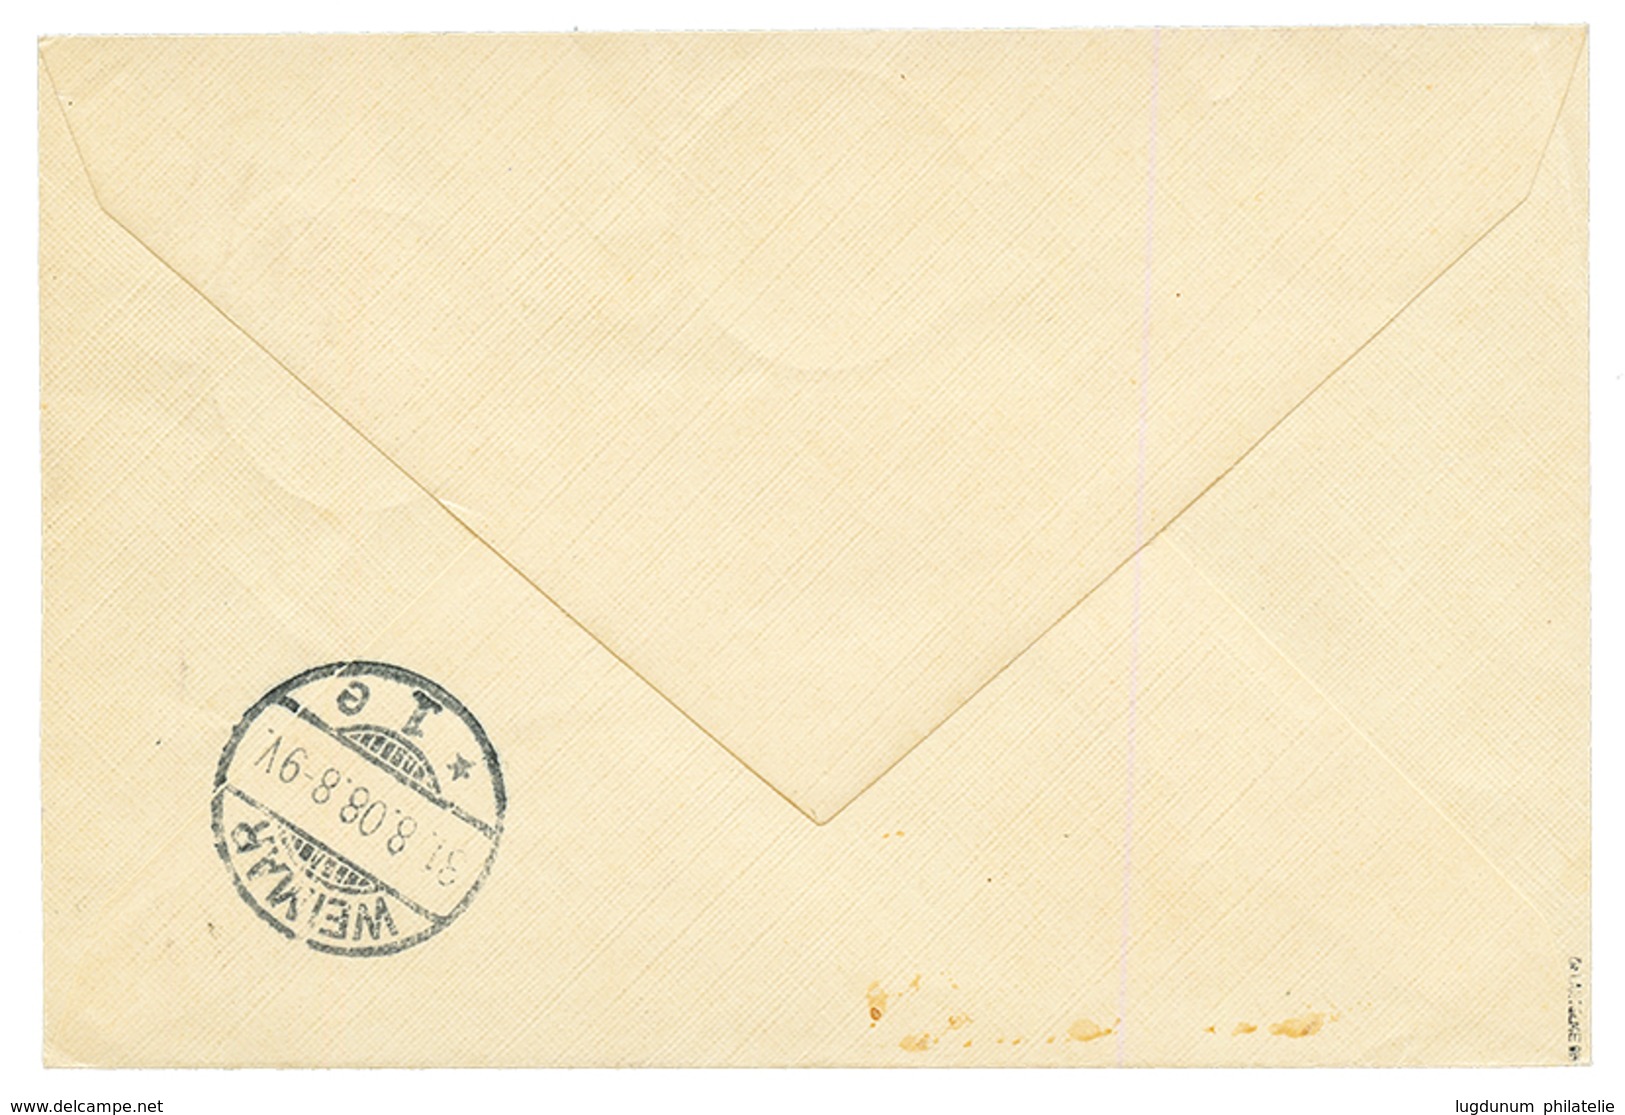 CAROLINES : 1908 5pf + 25pf Canc. TRUK KAROLINEN On REGISTERED Envelope To WEIMAR. RARE. Vf. - Carolinen